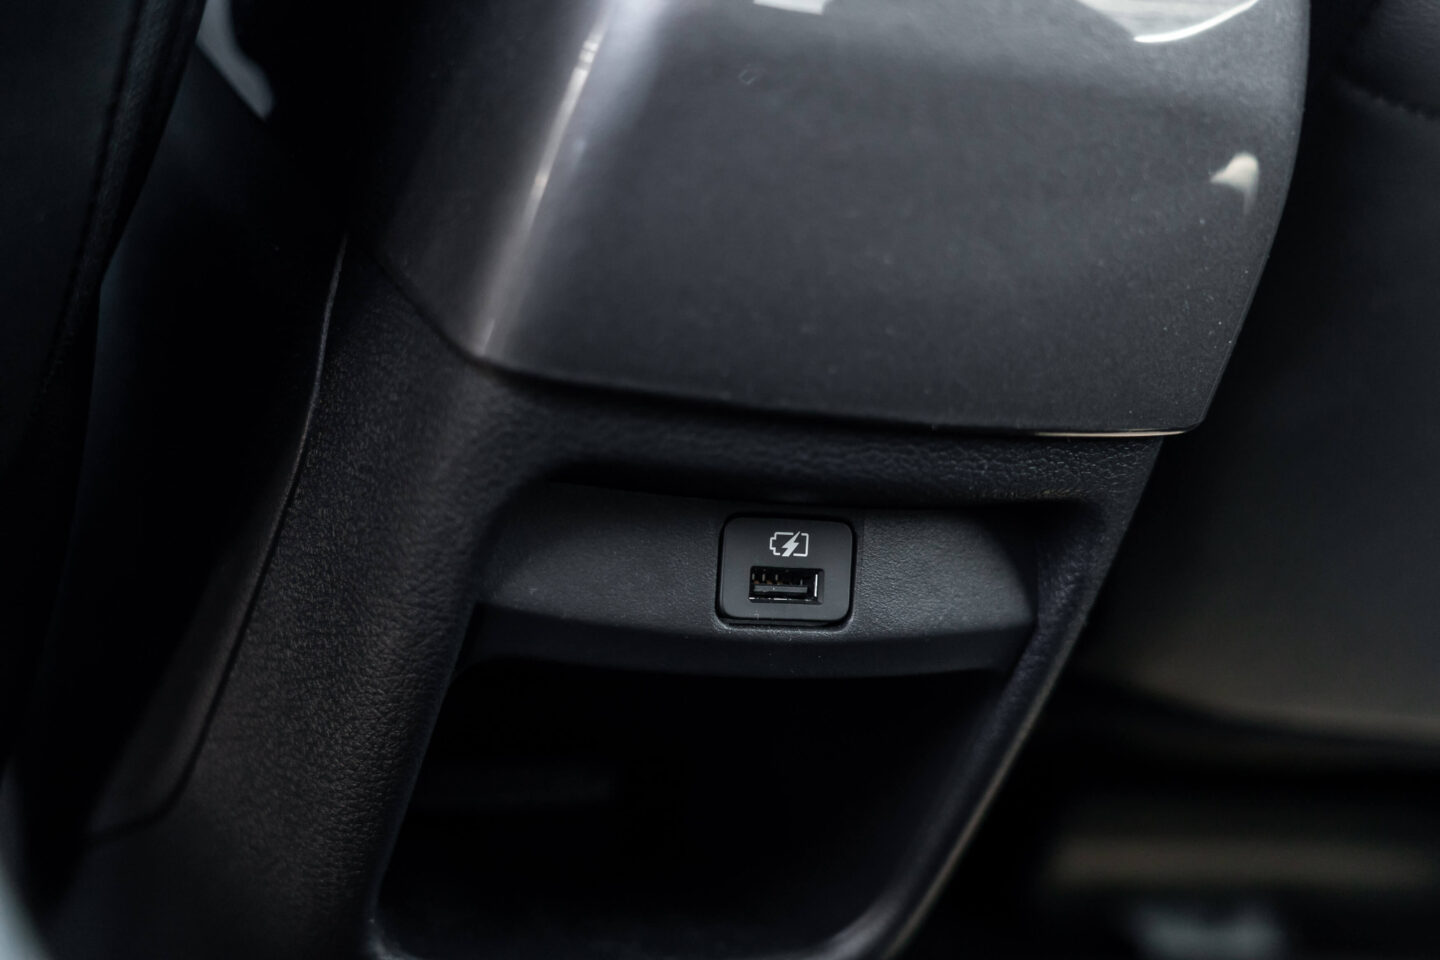 Nissan Juke Hybrid pormenor da tomada USB traseira